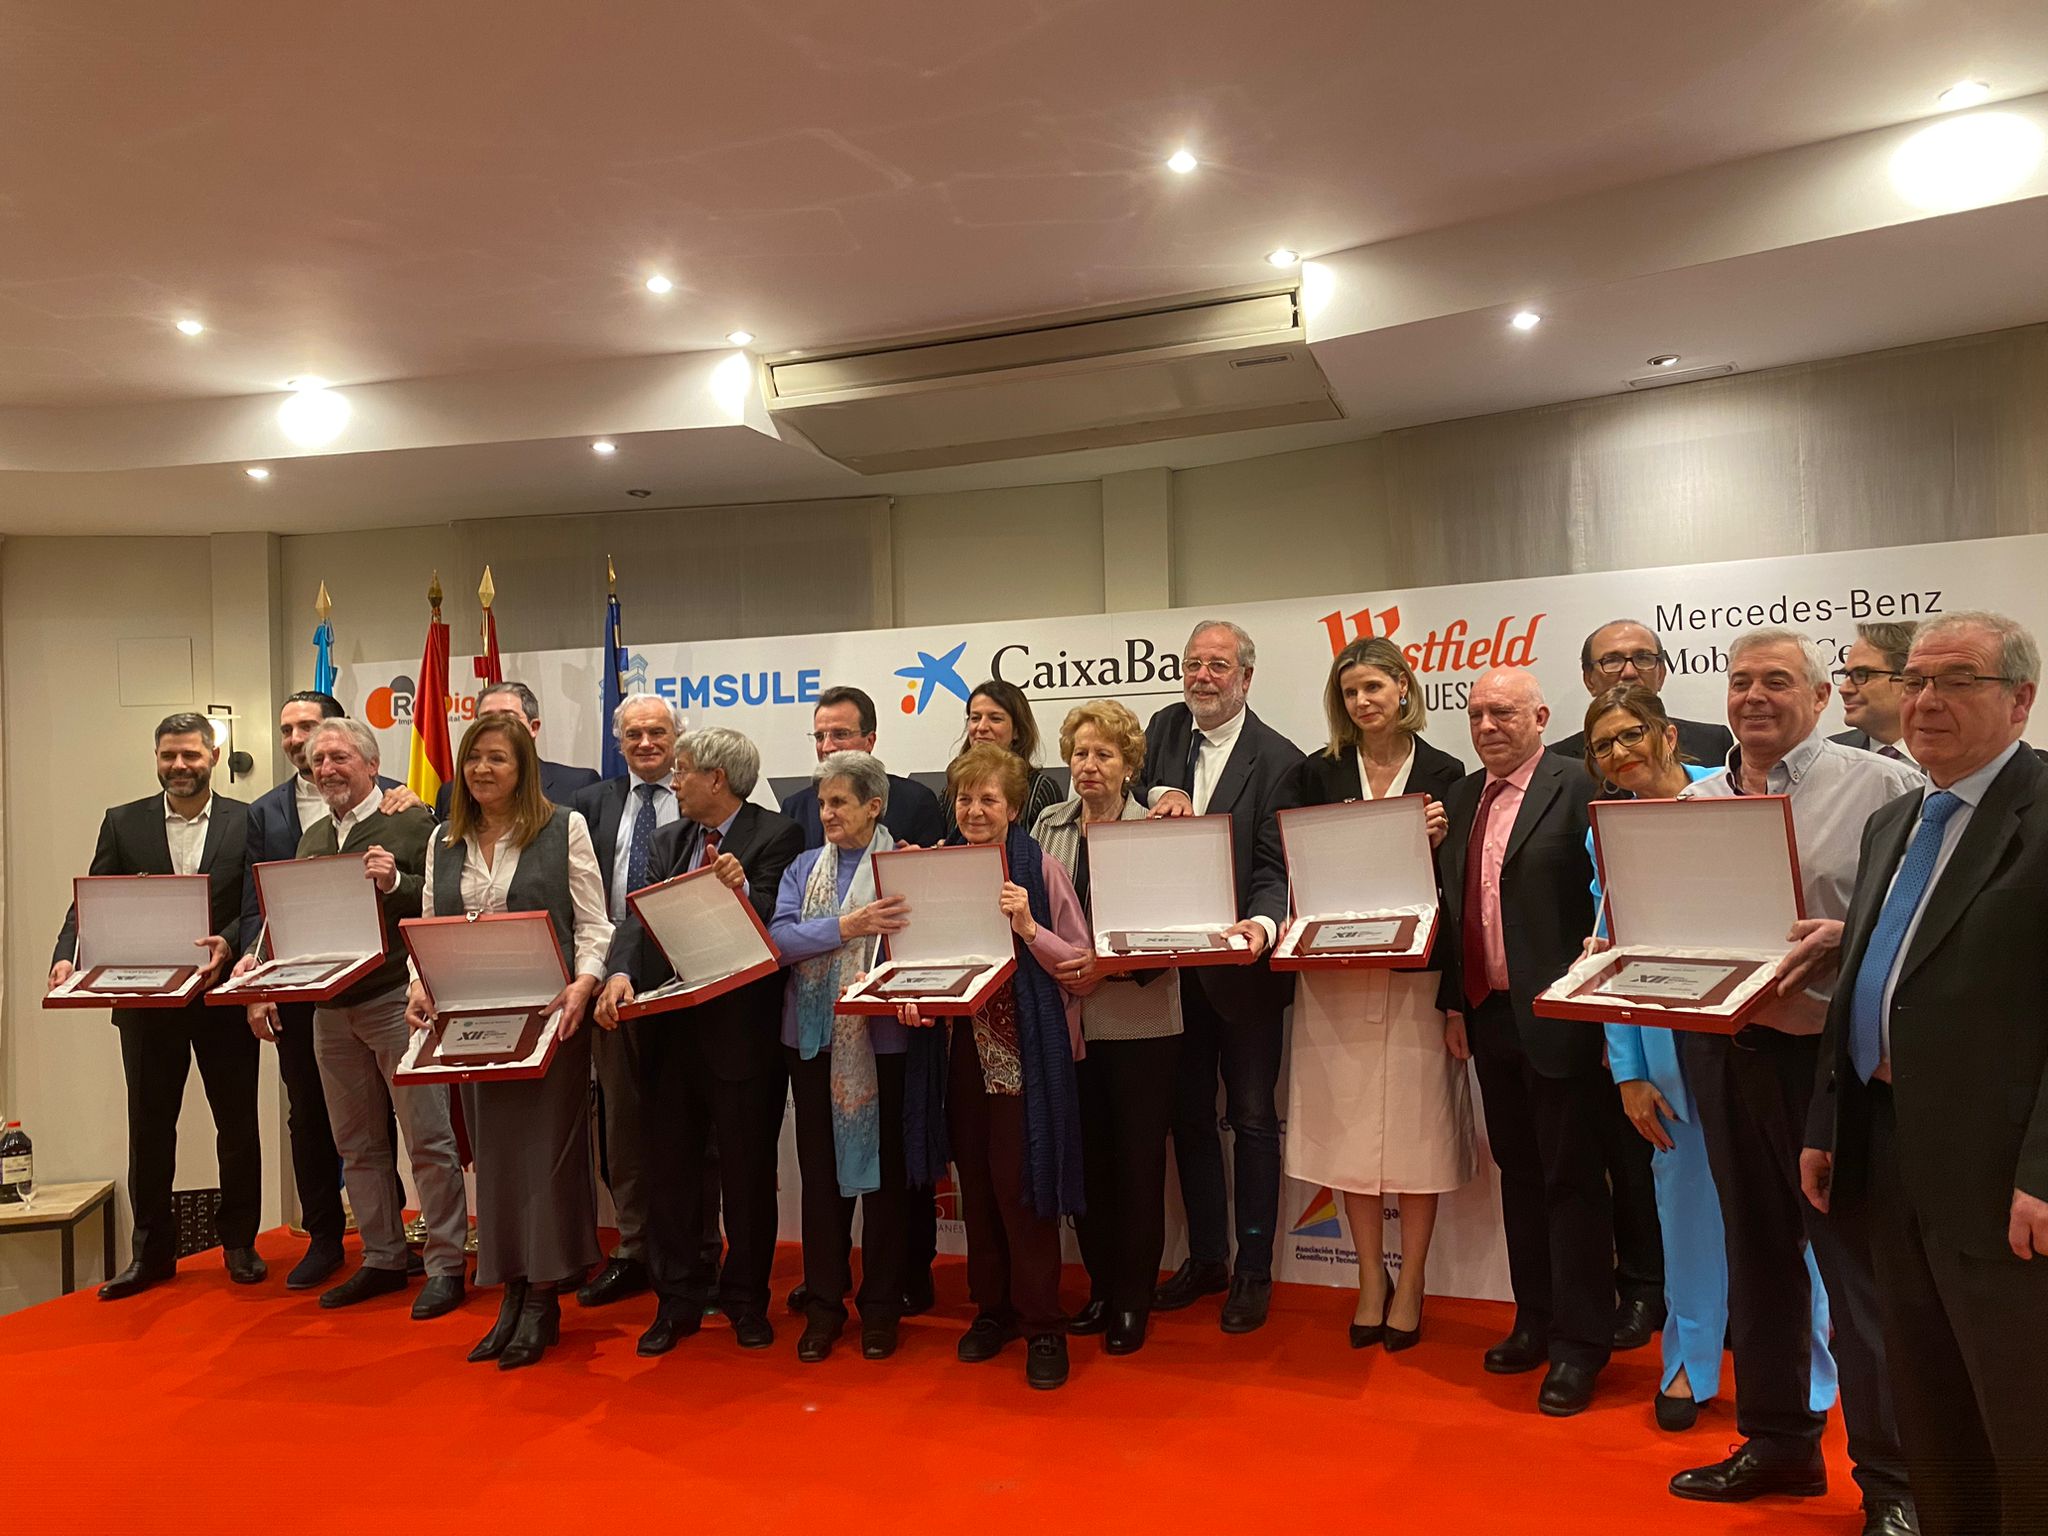 UNELE celebra sus XII Premios Ciudad de Leganés